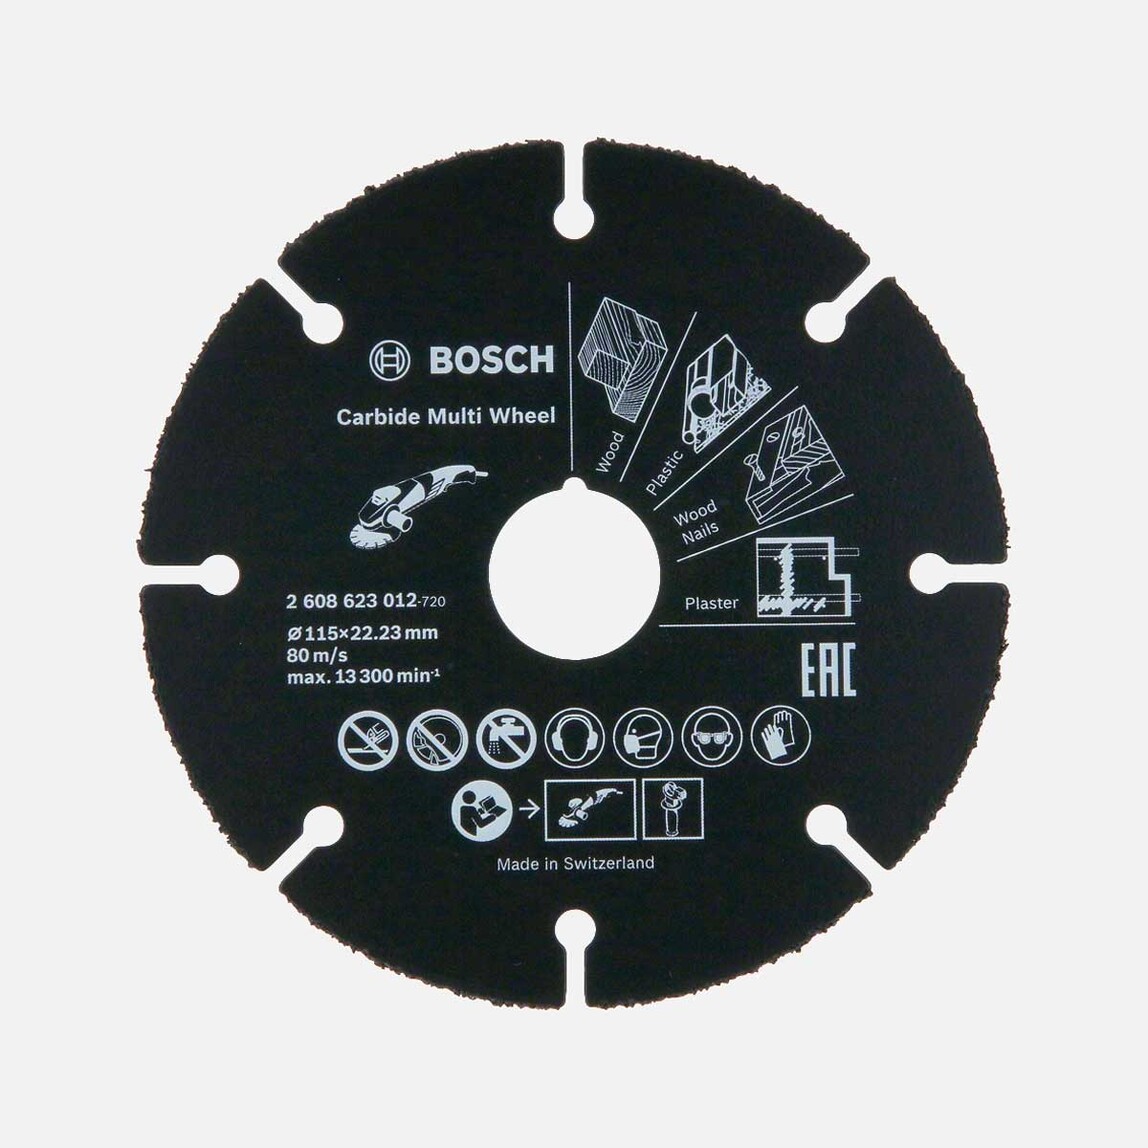    Bosch Carbide Multıwheel 115 mm  